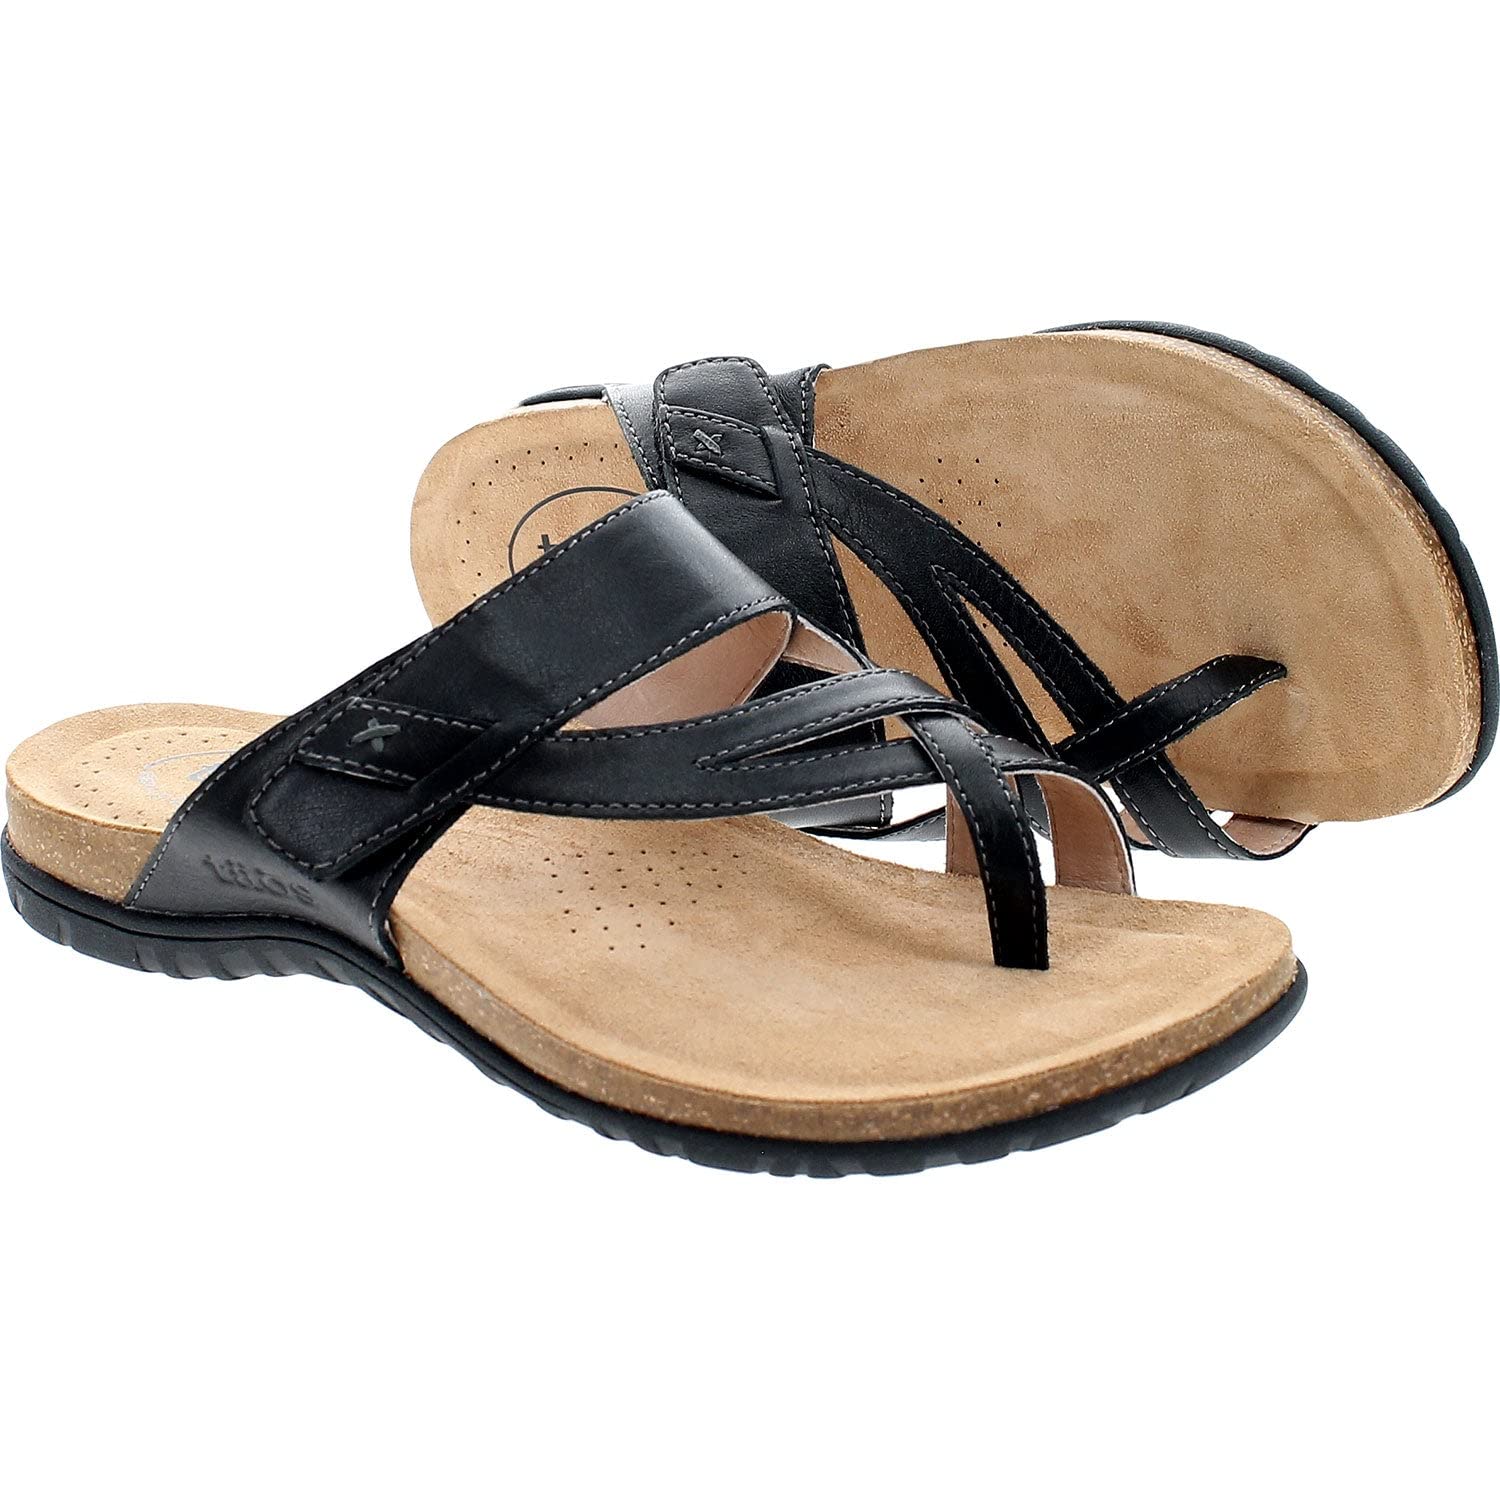 Taos Footwear Women's Perfect Sandal